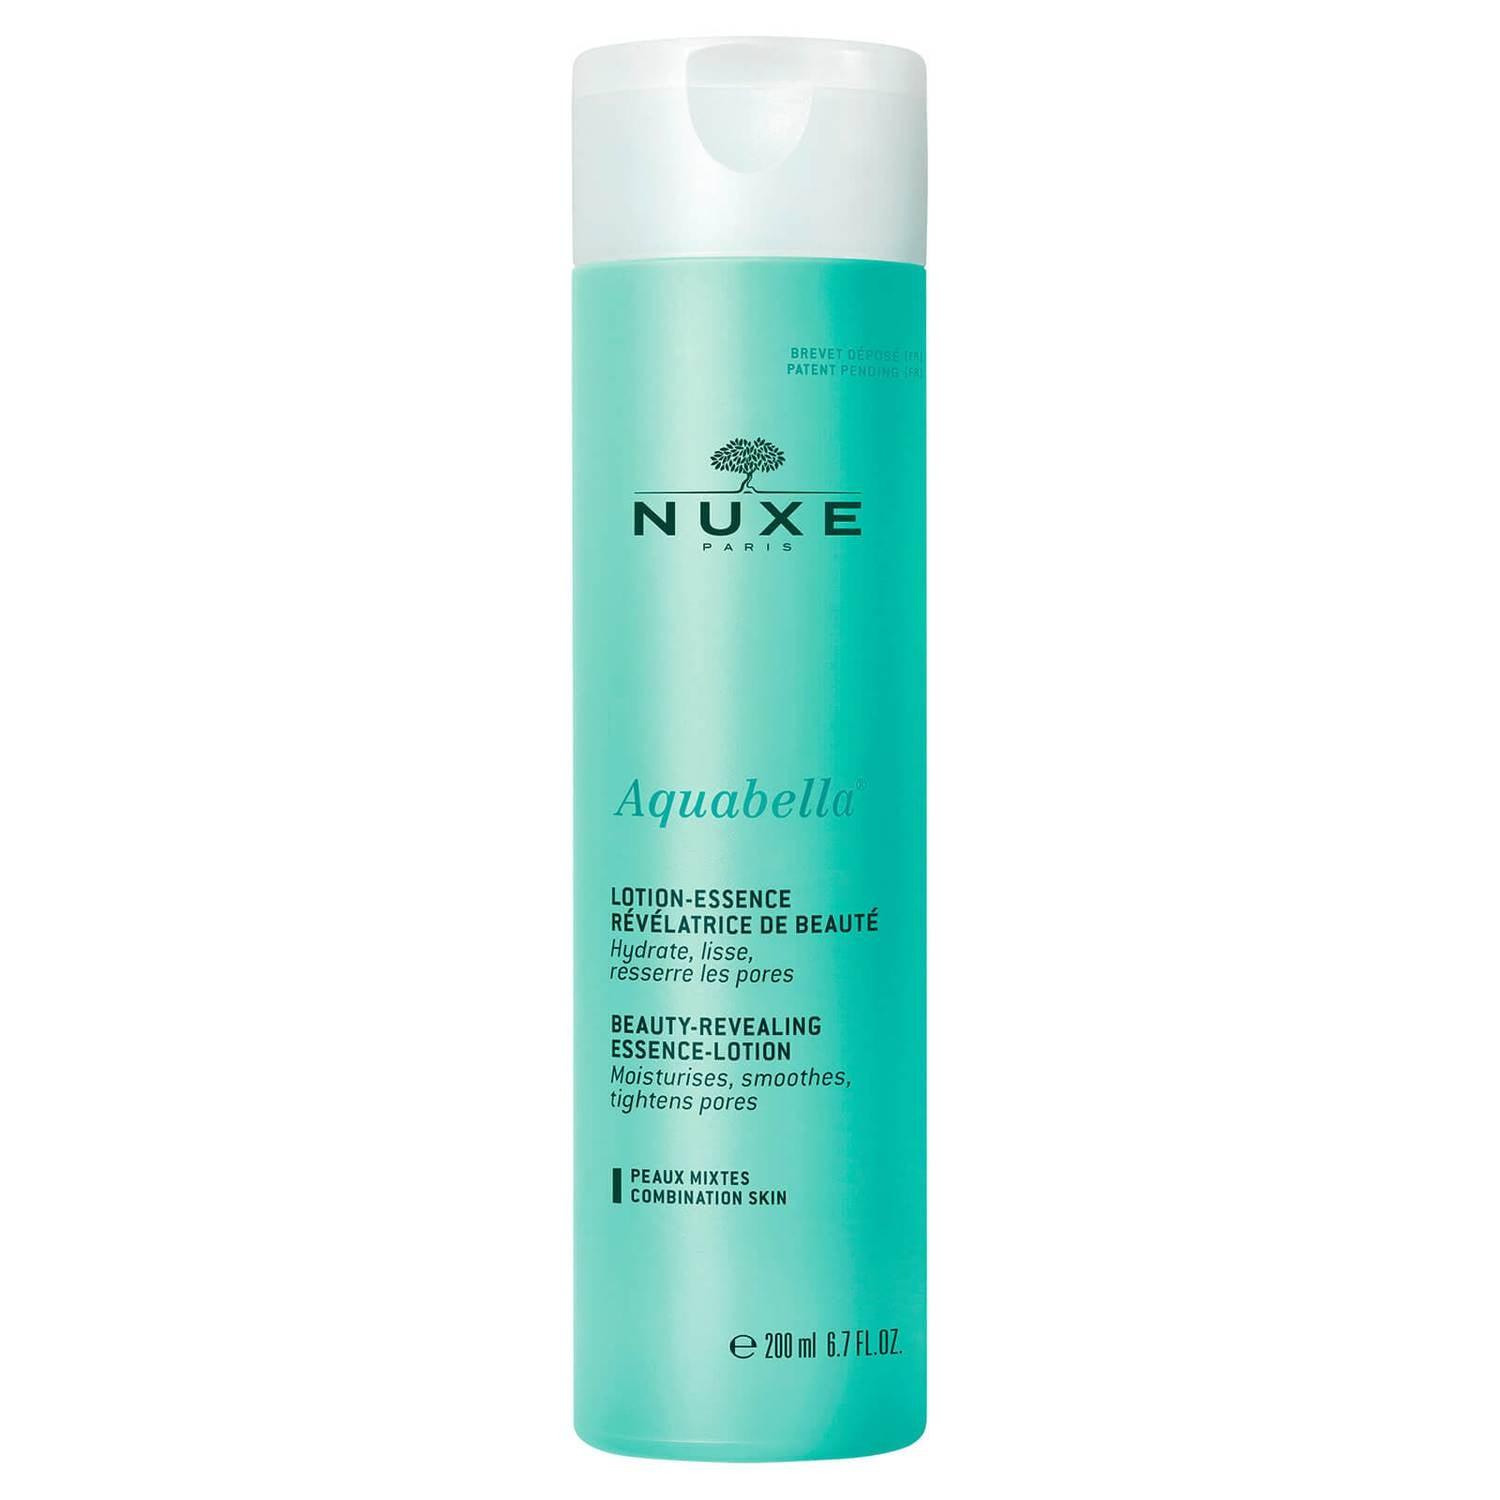 NUXE Beauty Revealing Essence Lotion Aquabella 200 ml - Beauty Bounty